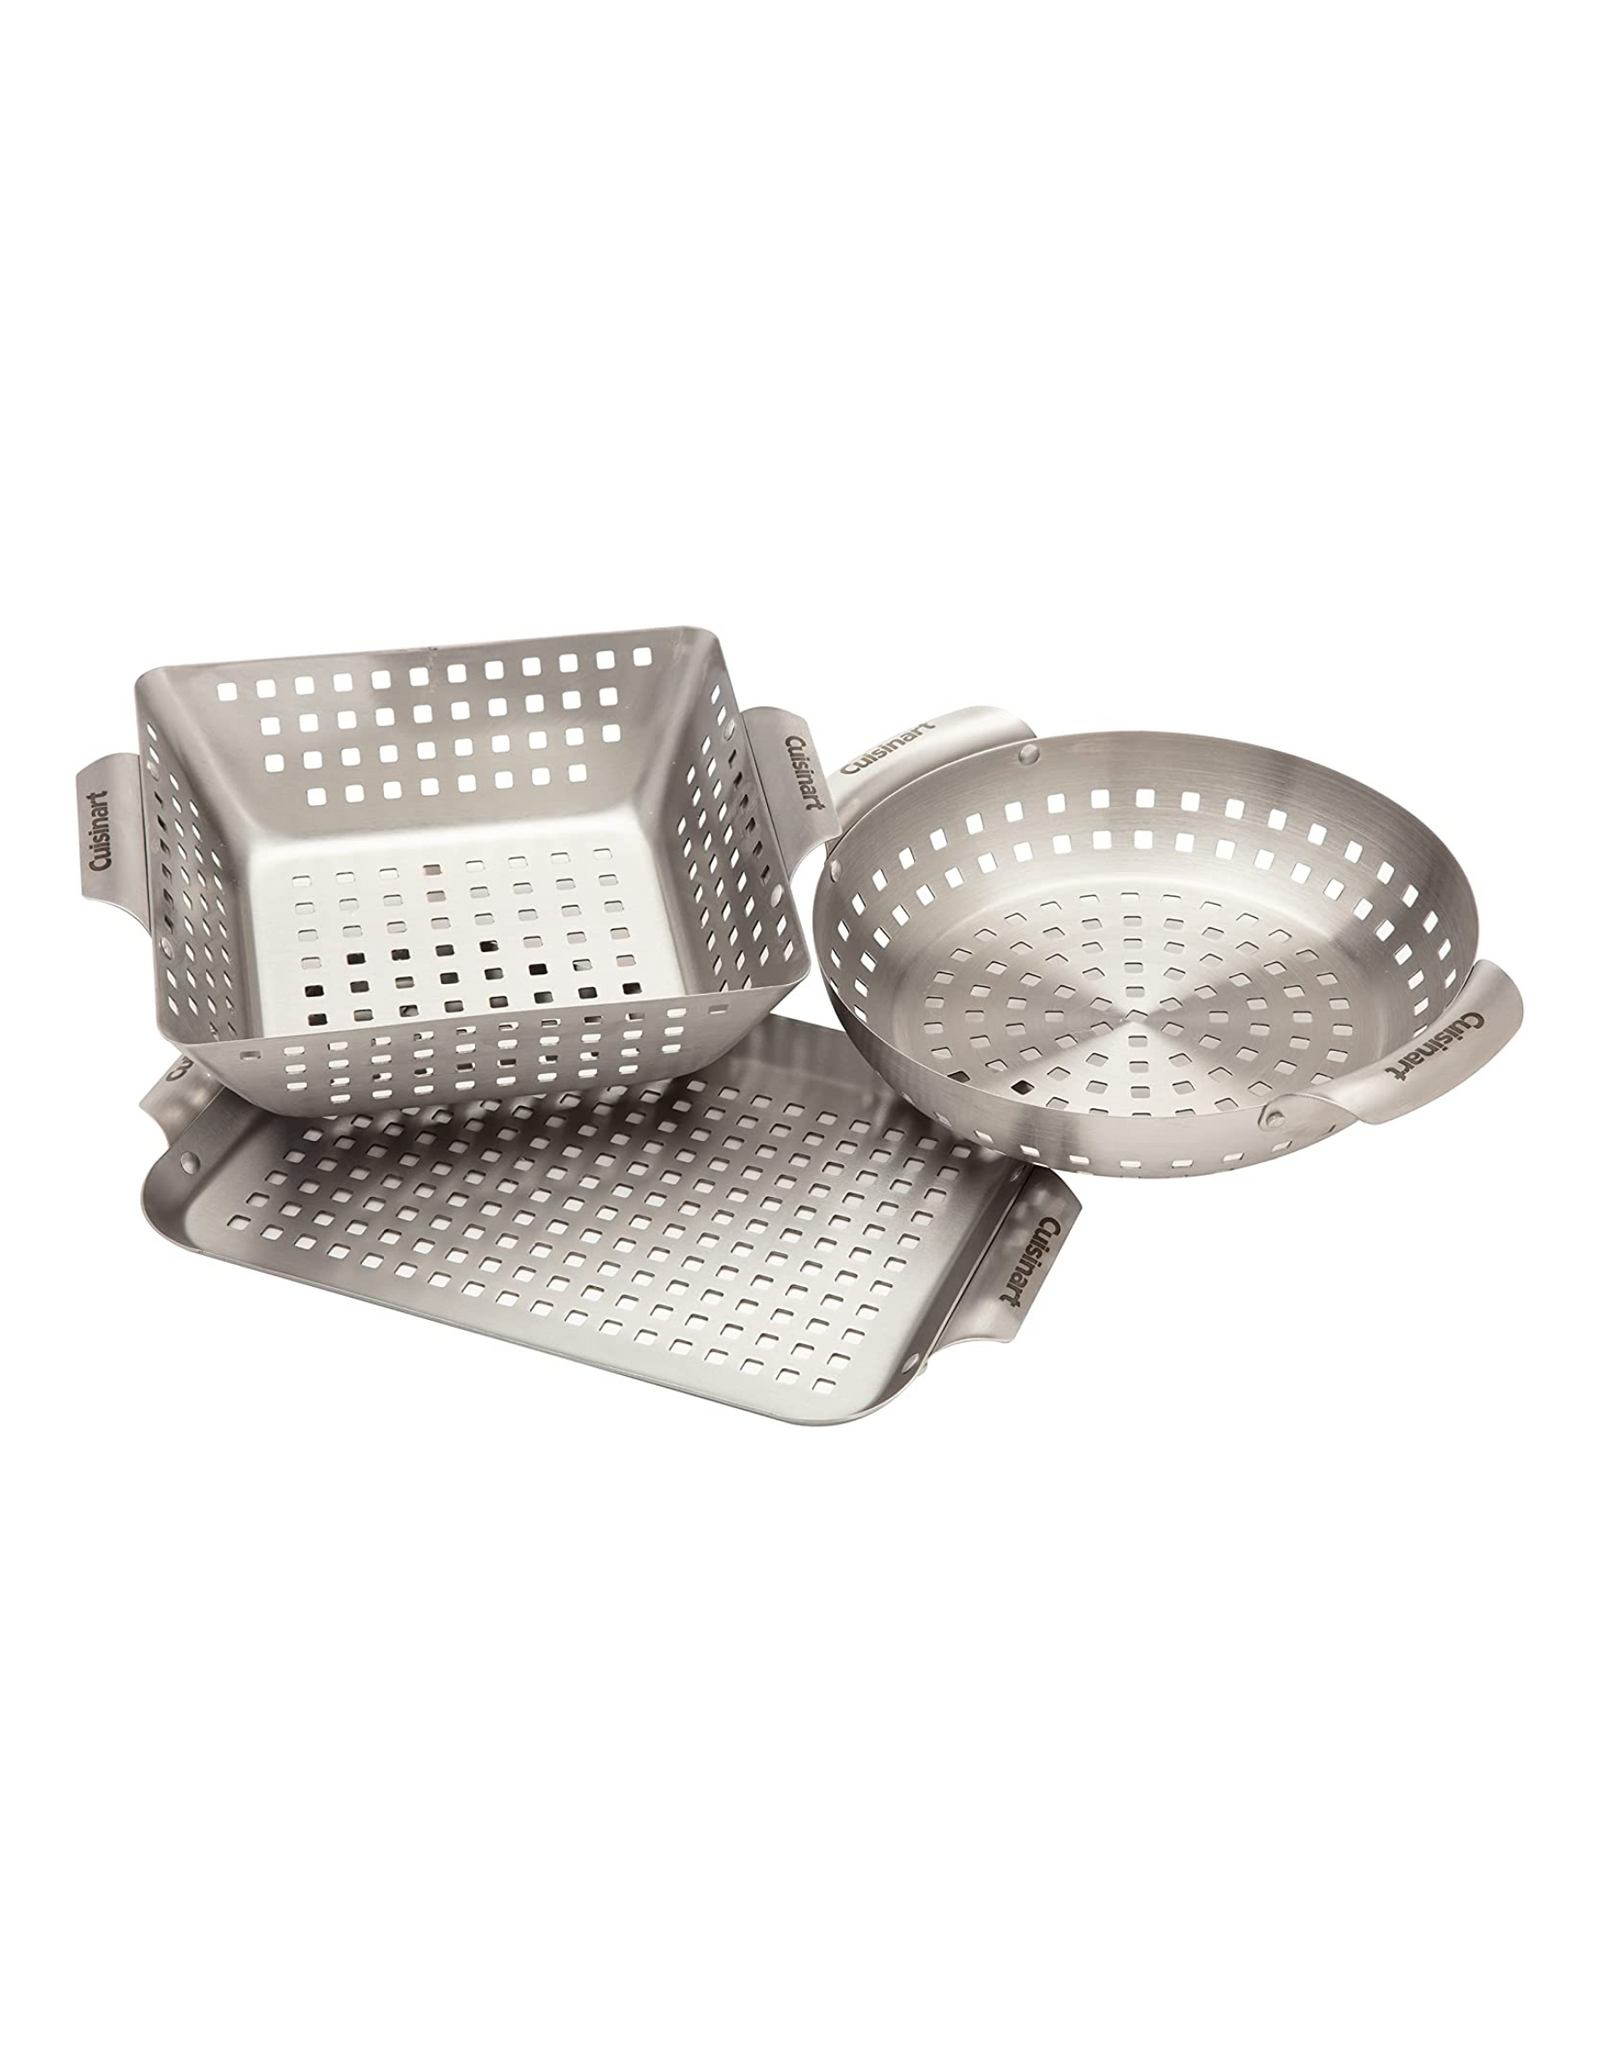 Cuisinart CGT-1103 3-Piece Stainless Steel Grill Topper Cookware Set